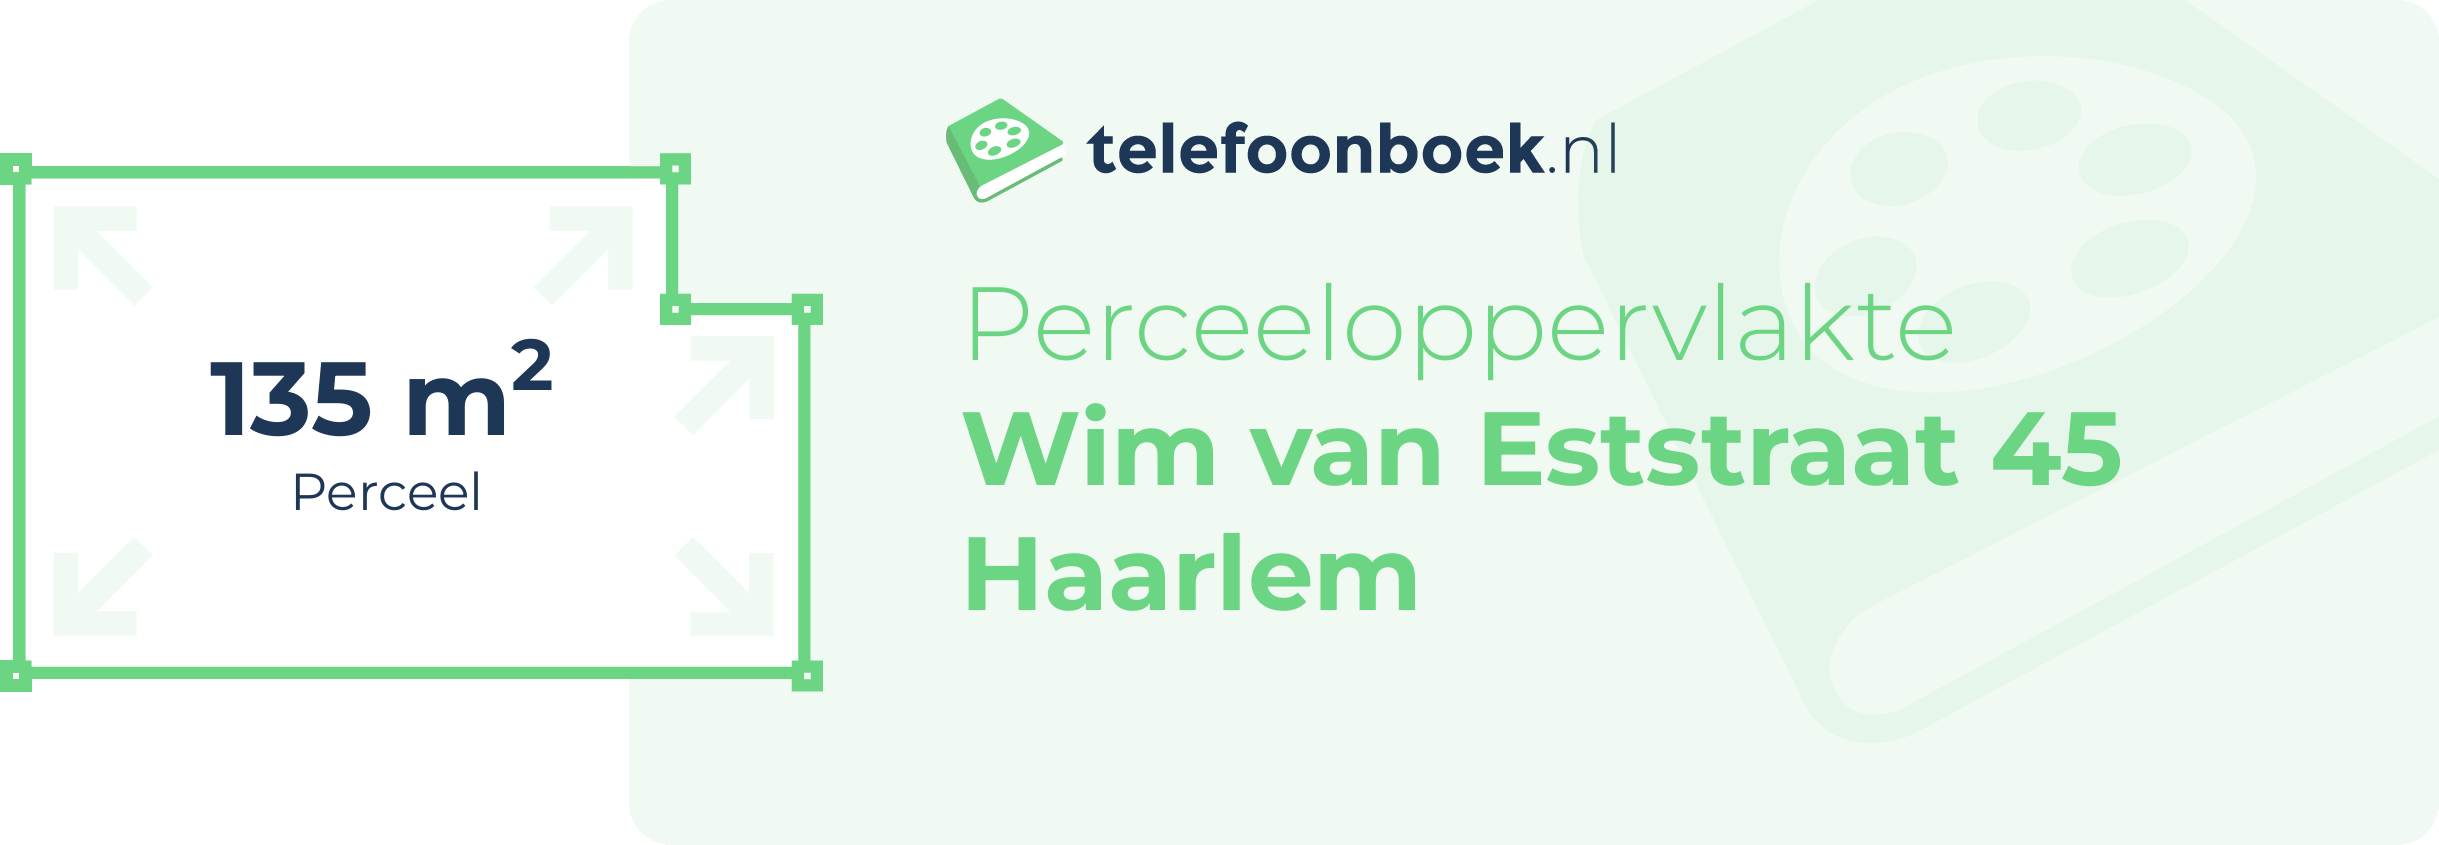 Perceeloppervlakte Wim Van Eststraat 45 Haarlem